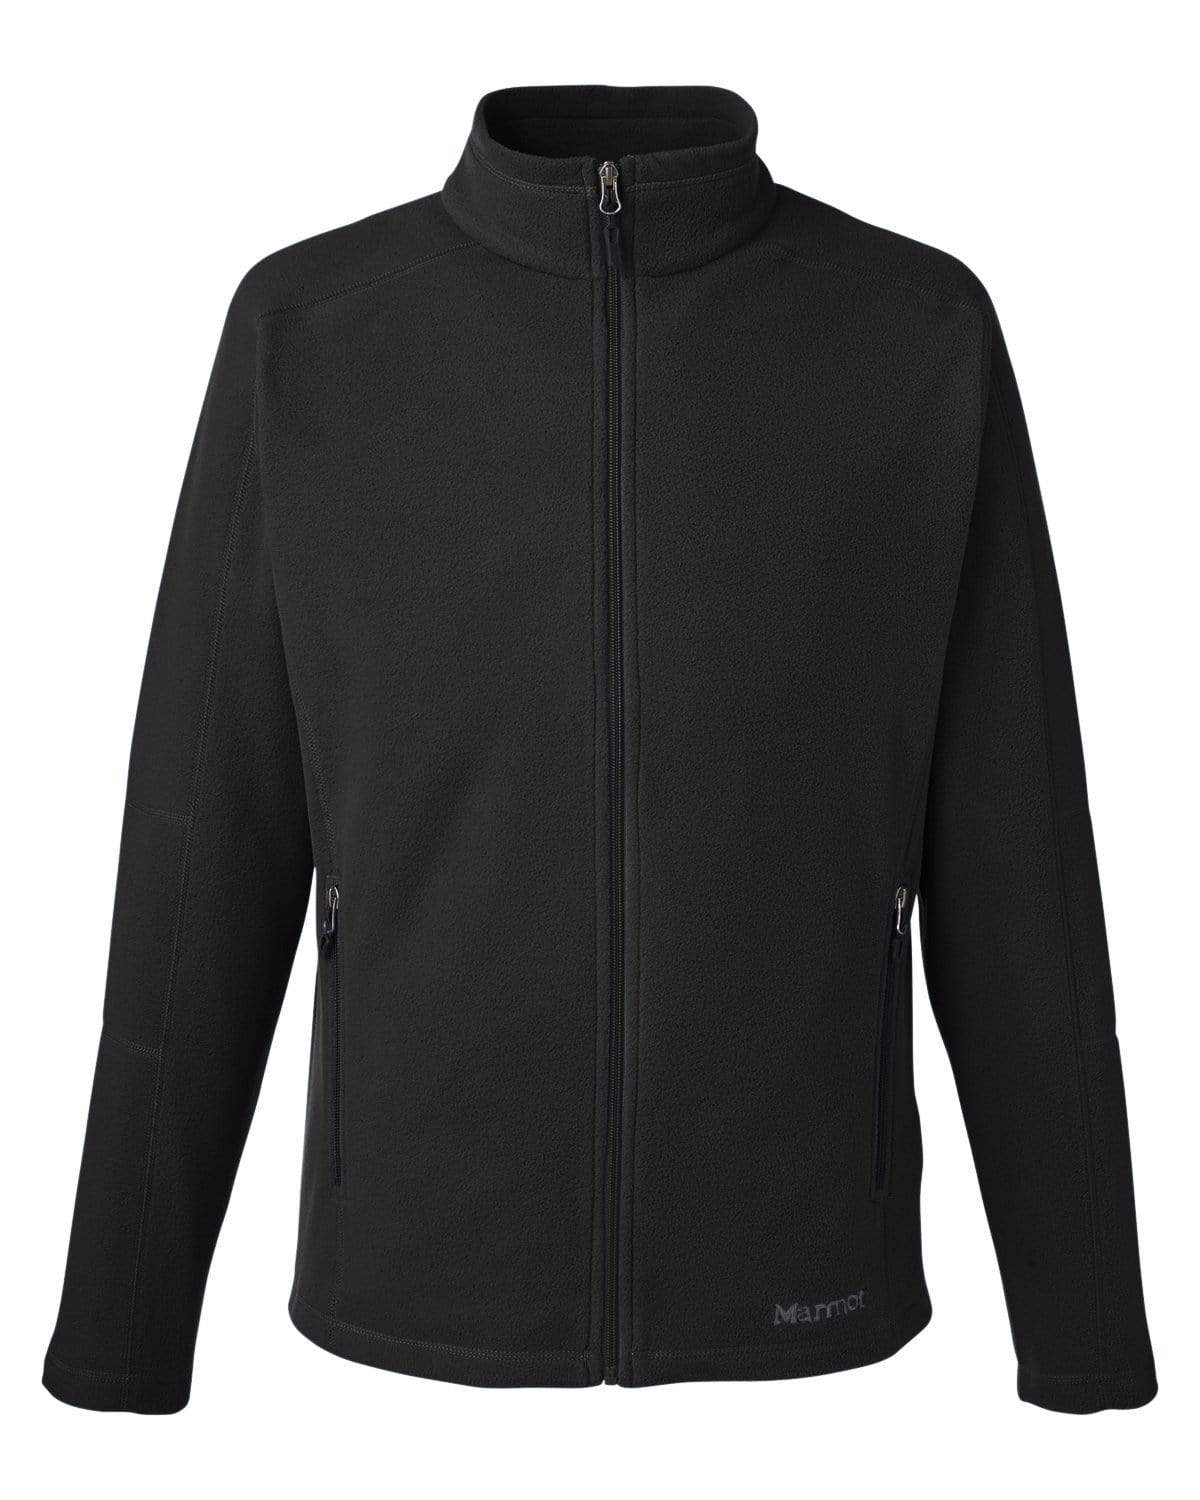 S / Black Custom Marmot Rocklin Fleece Full-Zip Jacket